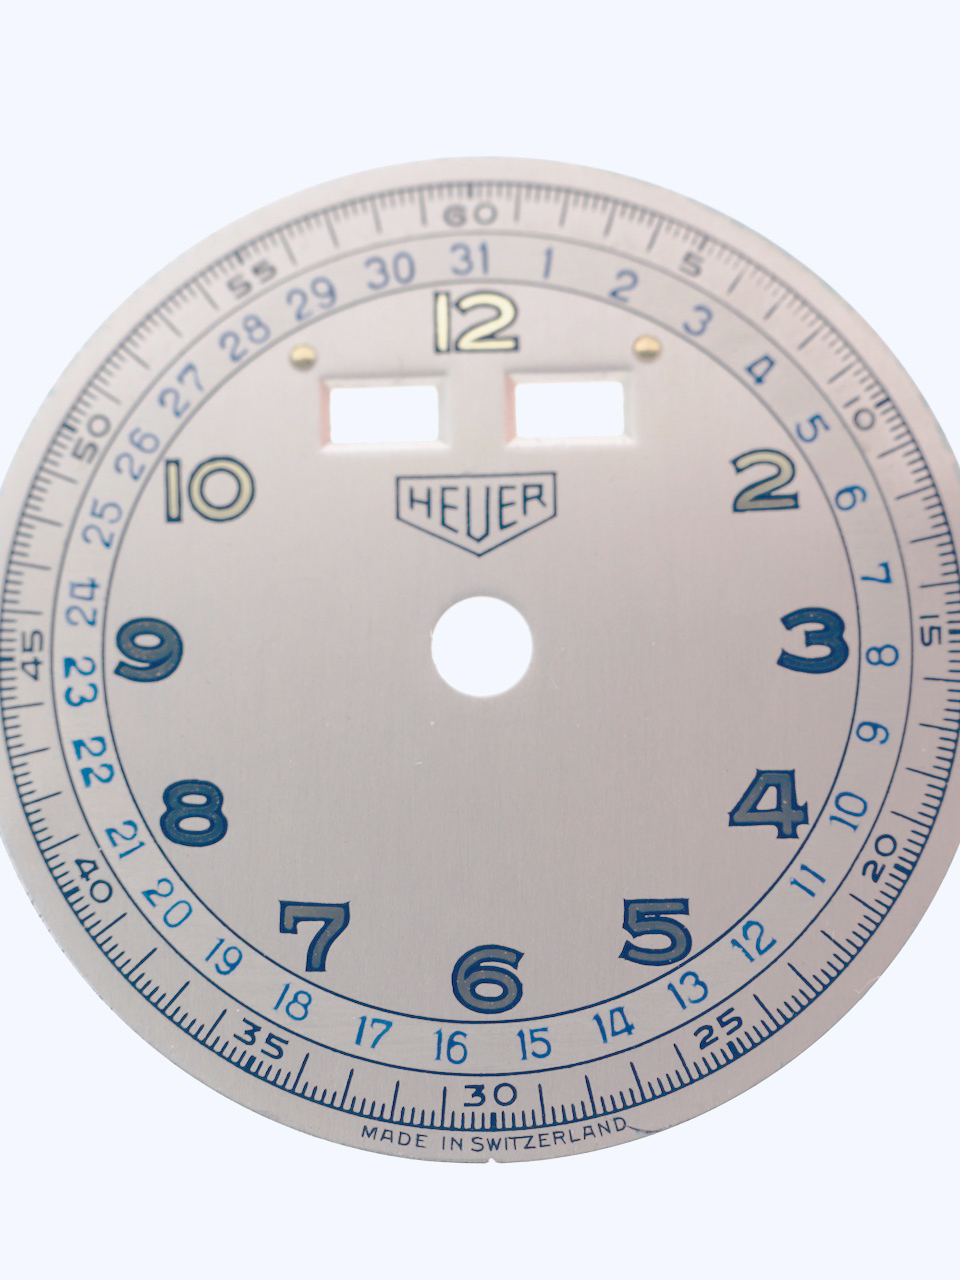 Heuer Triple Calendar for Valjoux 90 1940s